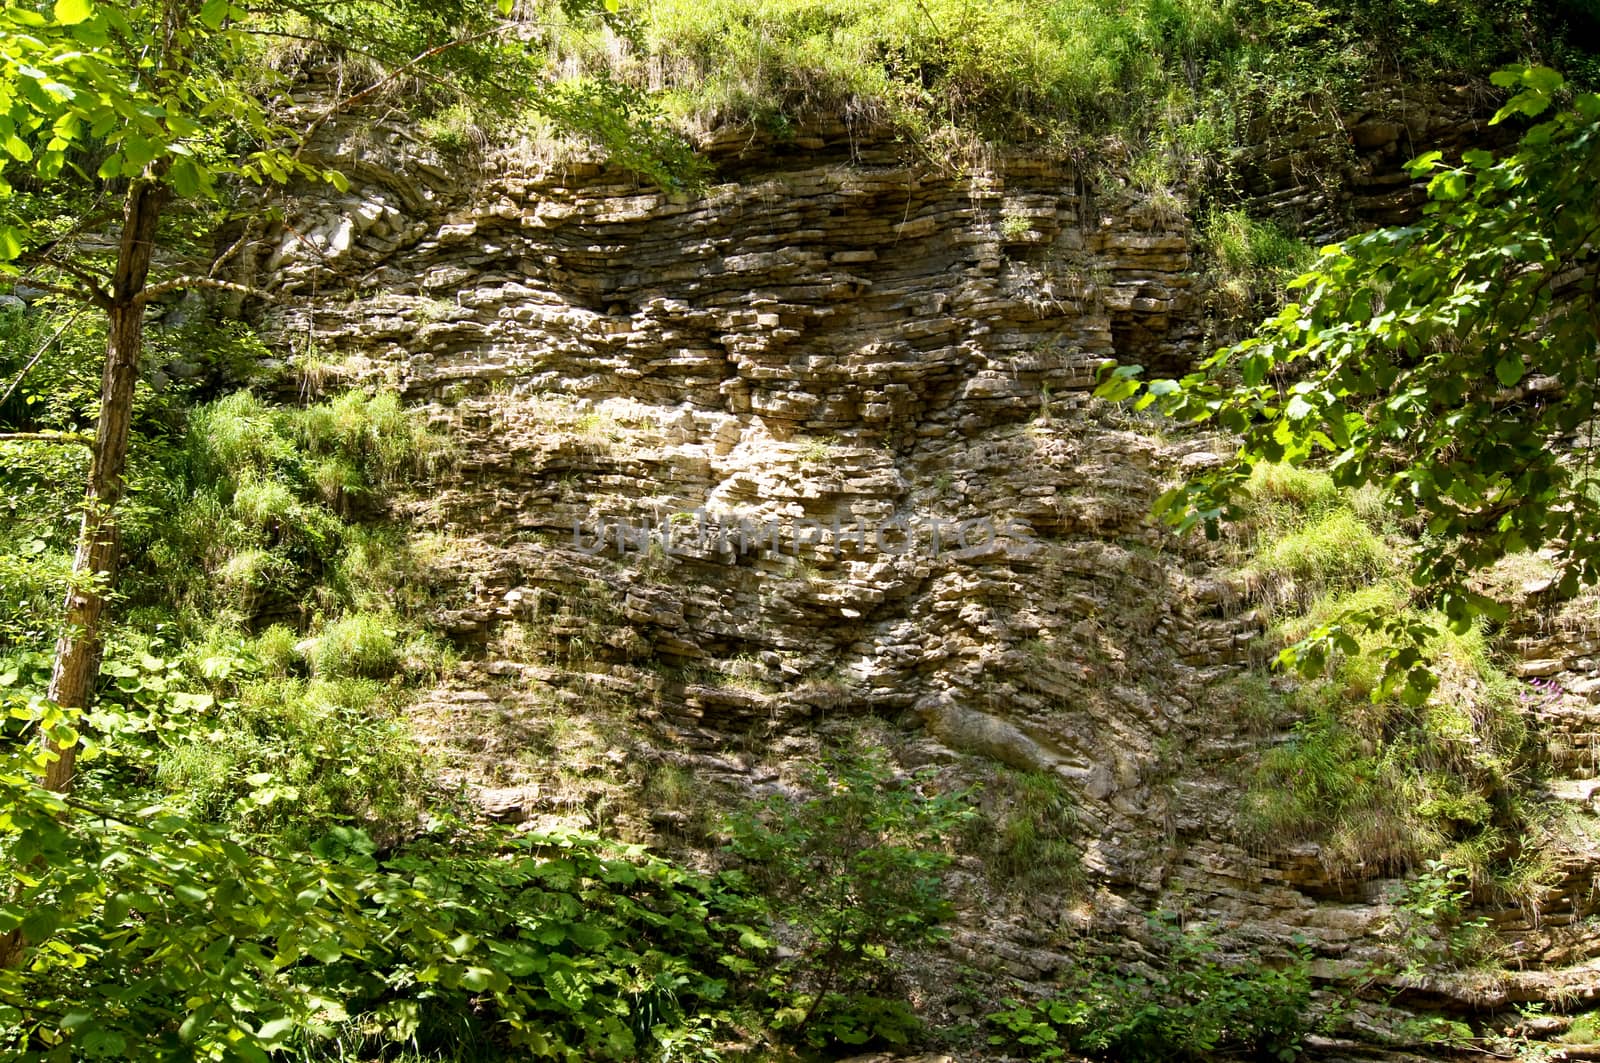 Rocky ridge in the south of caucasus